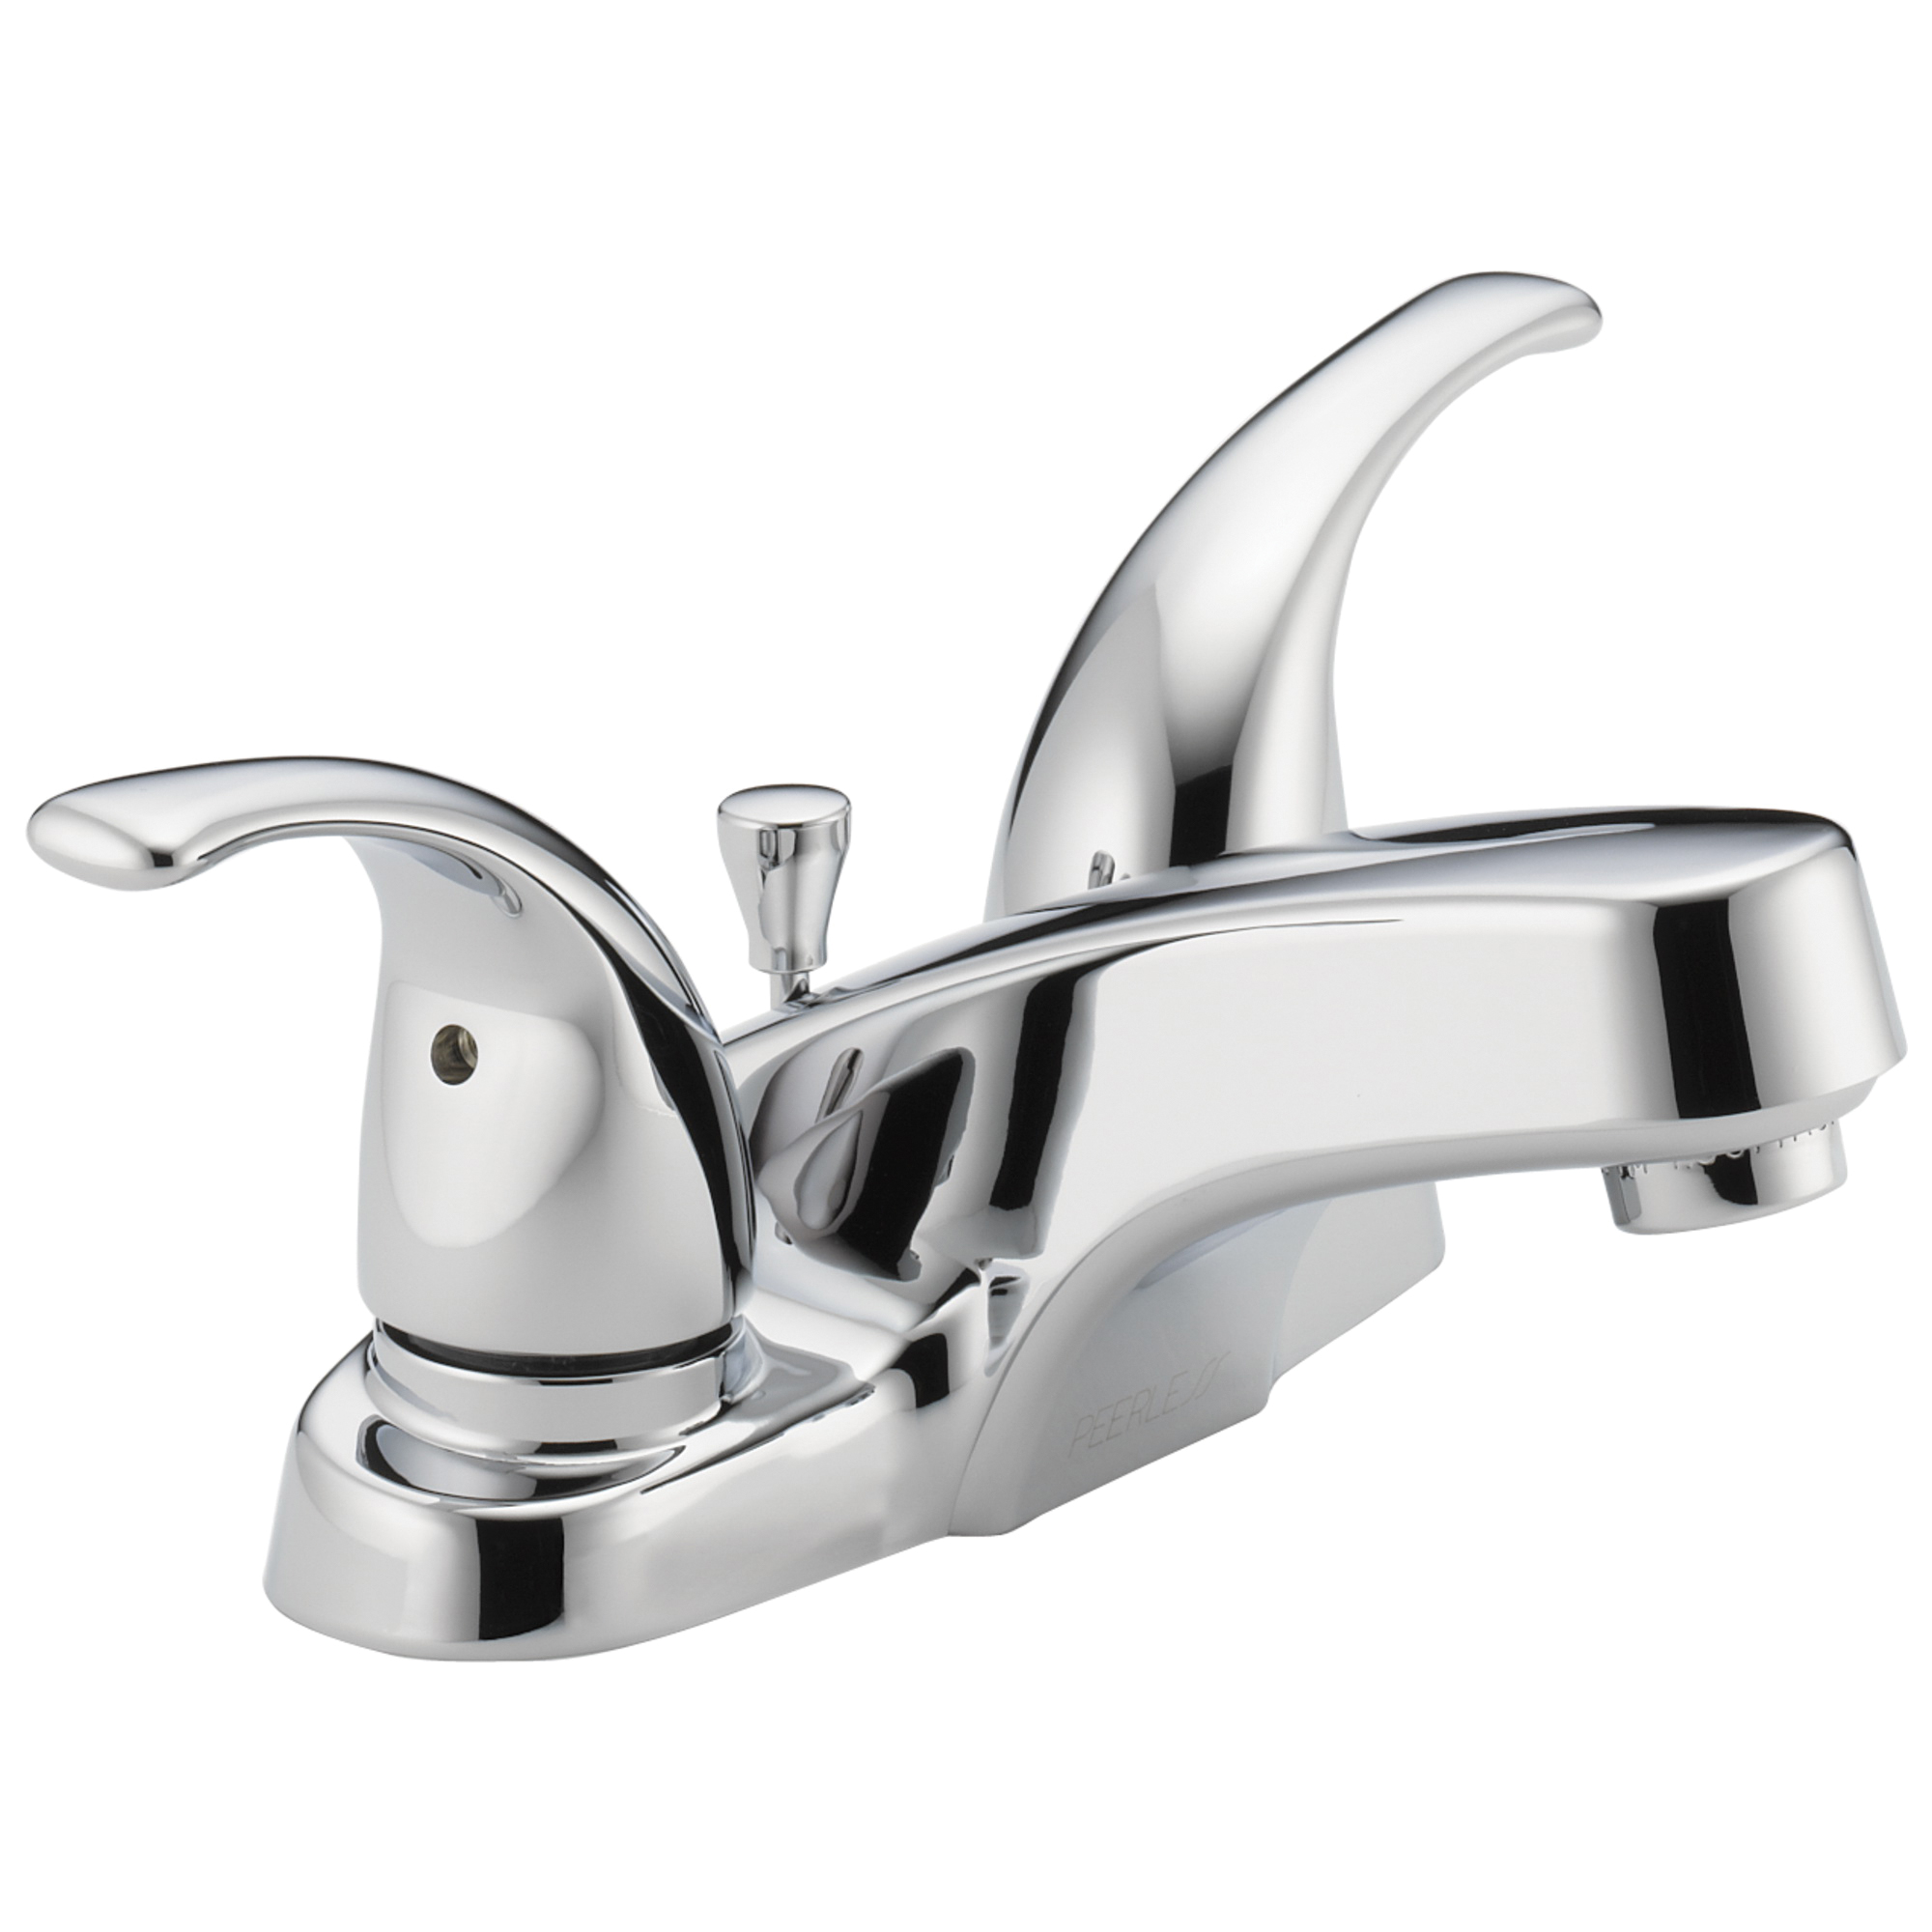 Peerless® P299628LF Centerset Lavatory Faucet, Chrome Plated, 2 Handles, Plastic Pop-Up Drain, 1.2 gpm